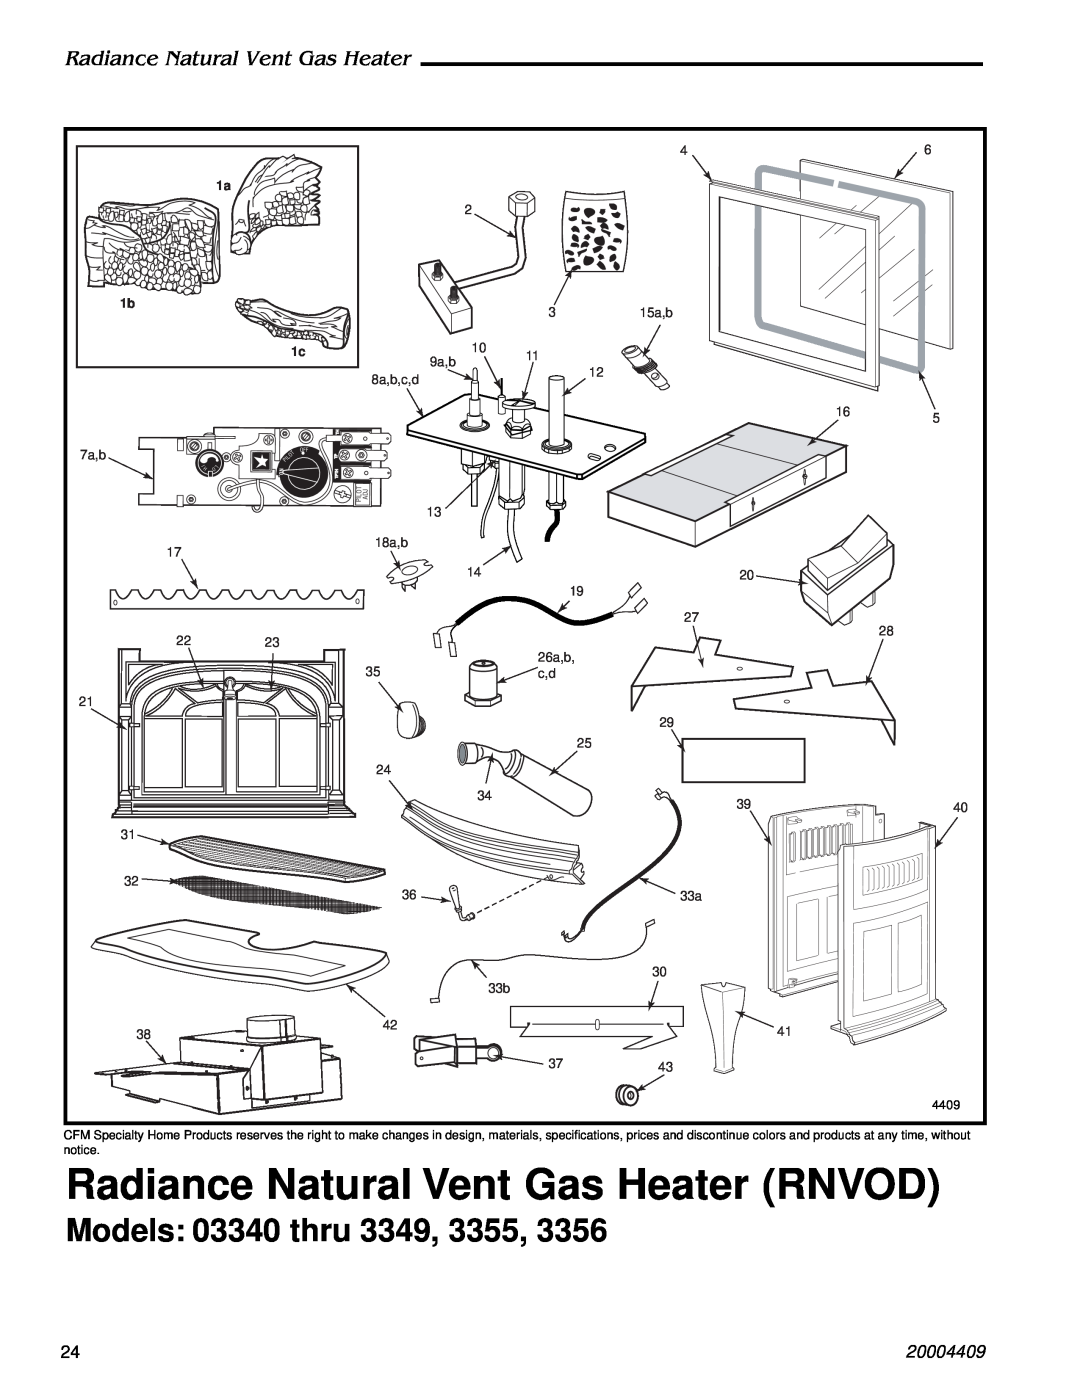 Vermont Casting 3349, 3356 4409 410, 3355 Models 03340 thru, Radiance Natural Vent Gas Heater RNVOD, 20004409, 1a 1b 1c 